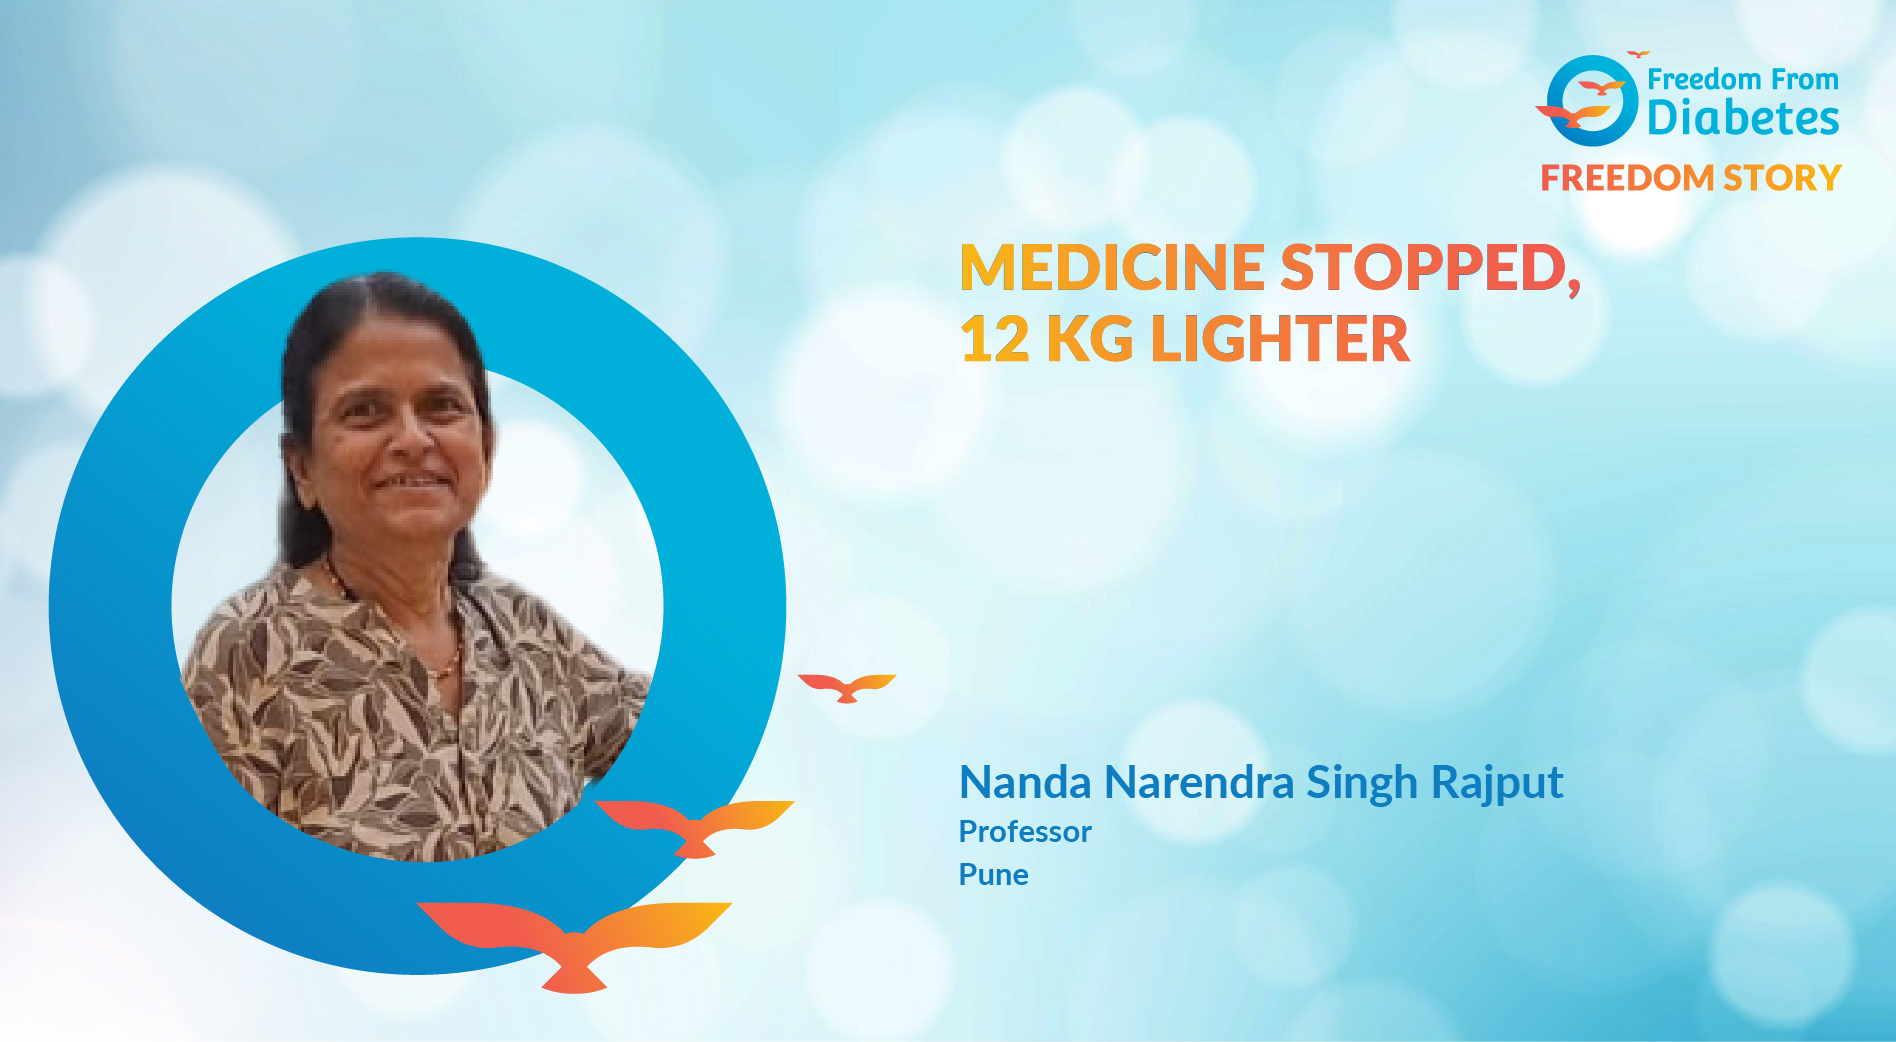 Nanda Narendra Singh Rajput: A story of super positivity